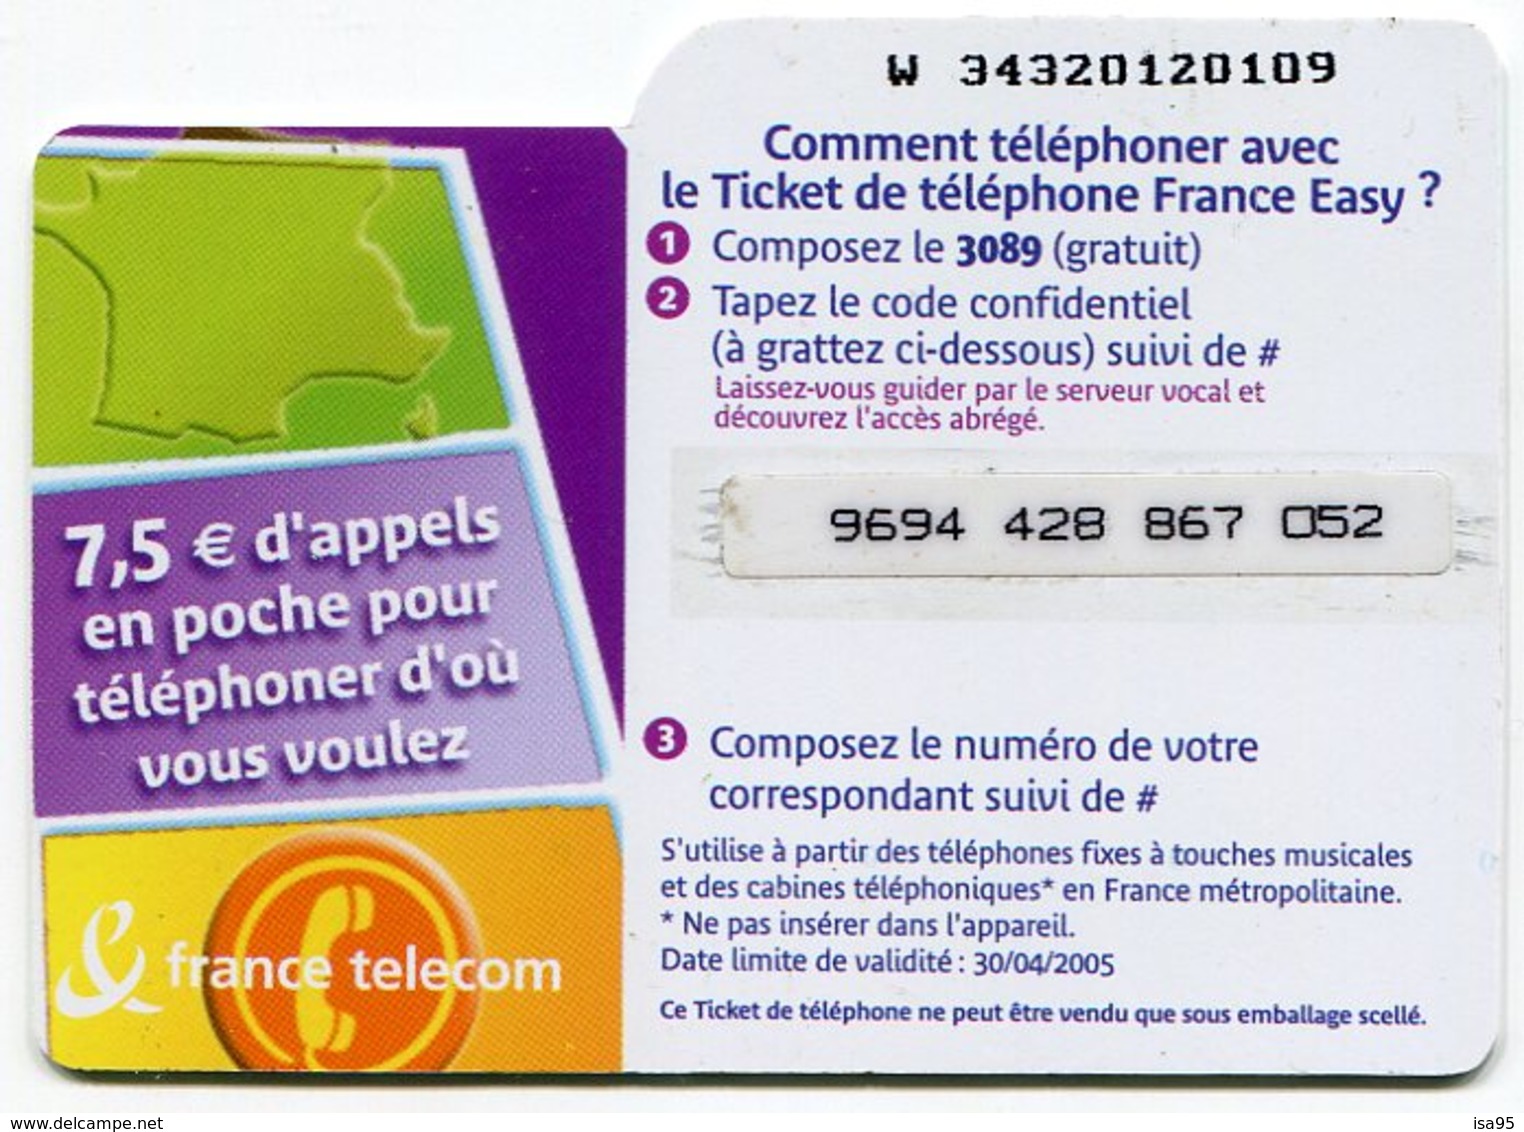 TELECARTE-LE TICKET DE TELEPHONE FRANCE EASY-2005-7.5€ - FT